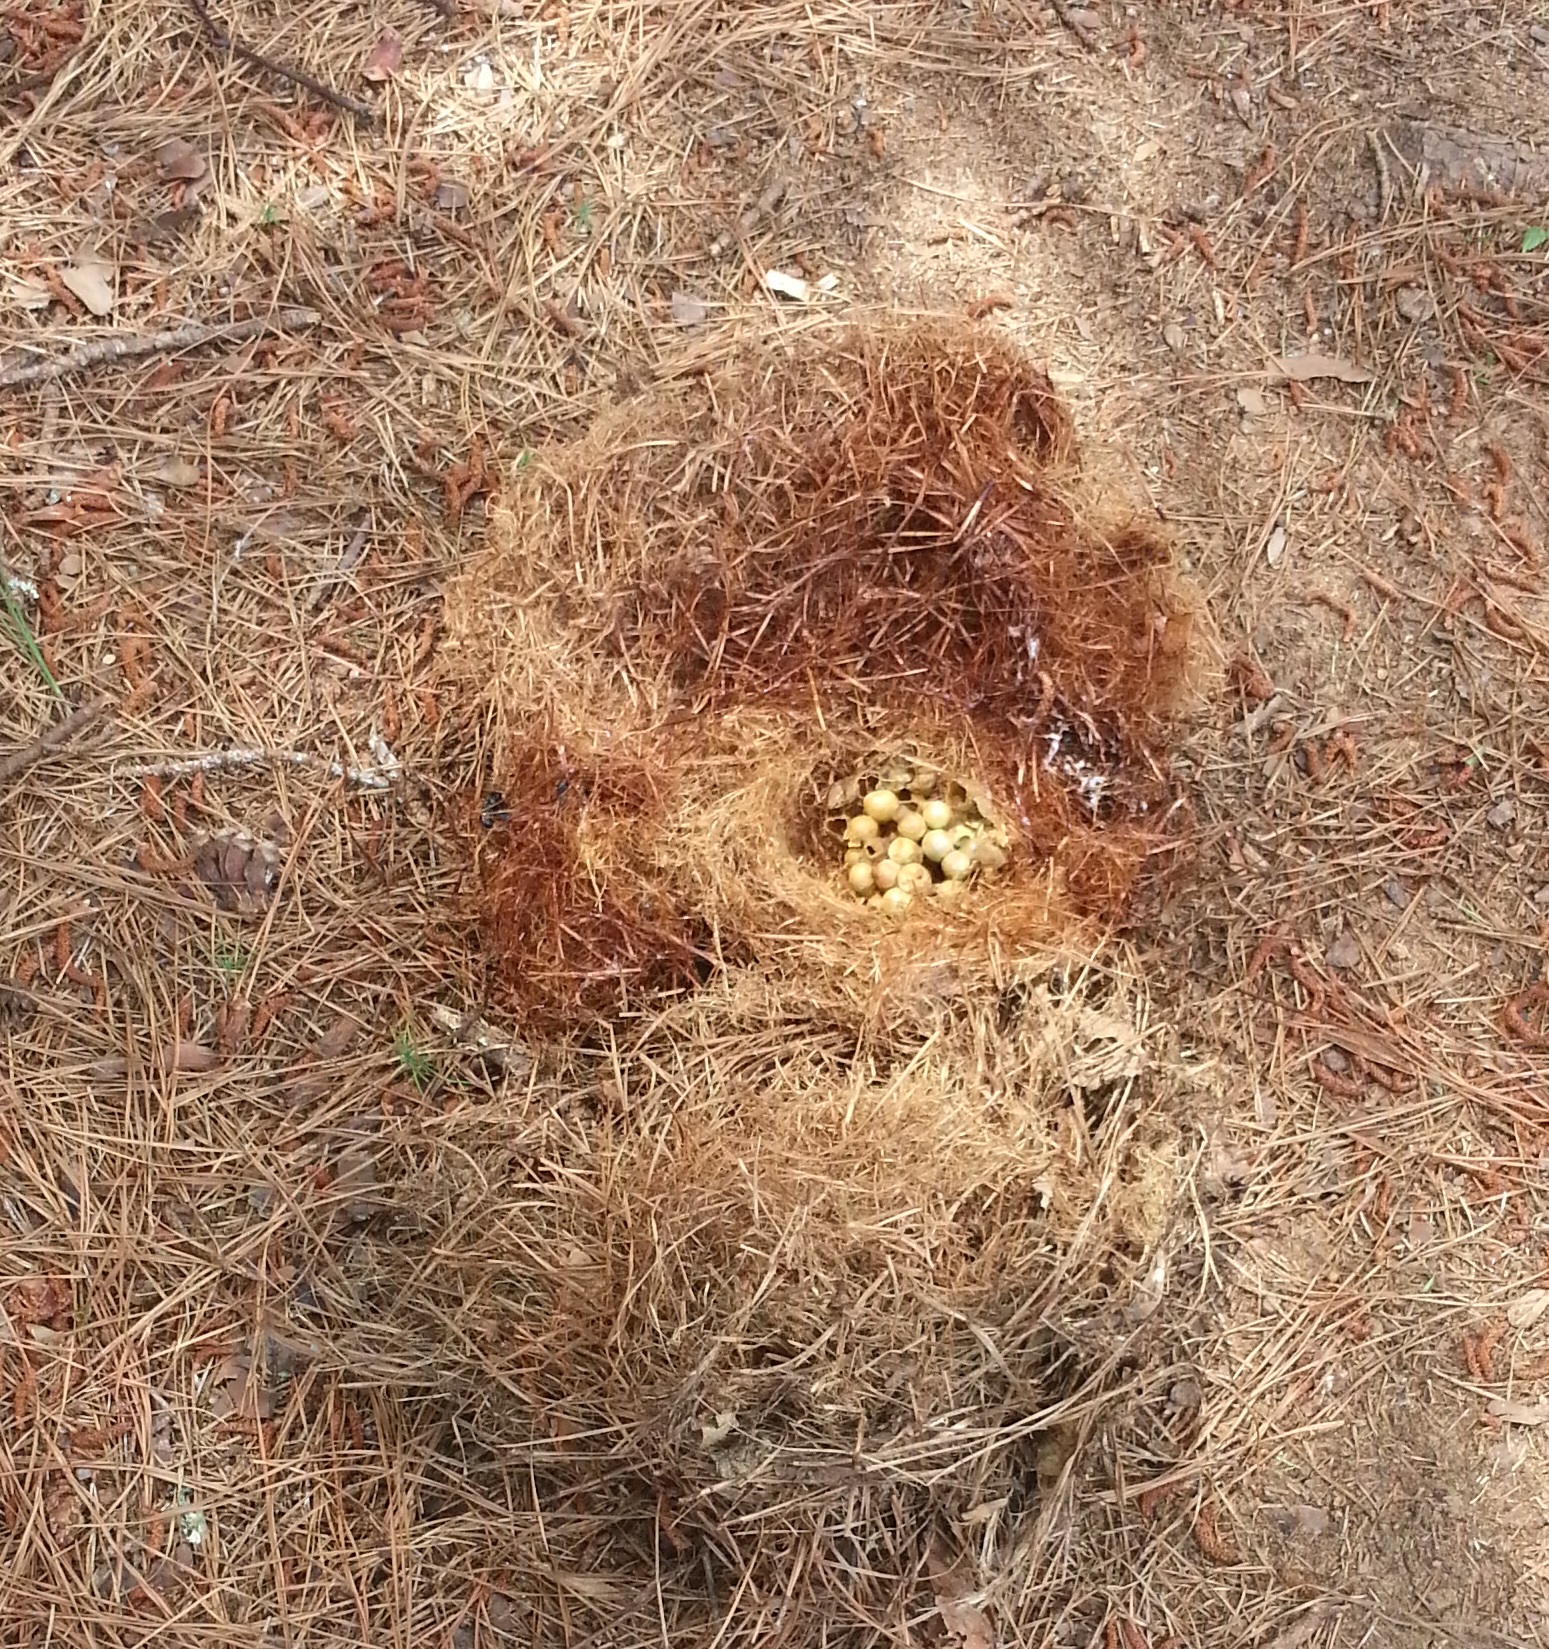 bumblebee nest